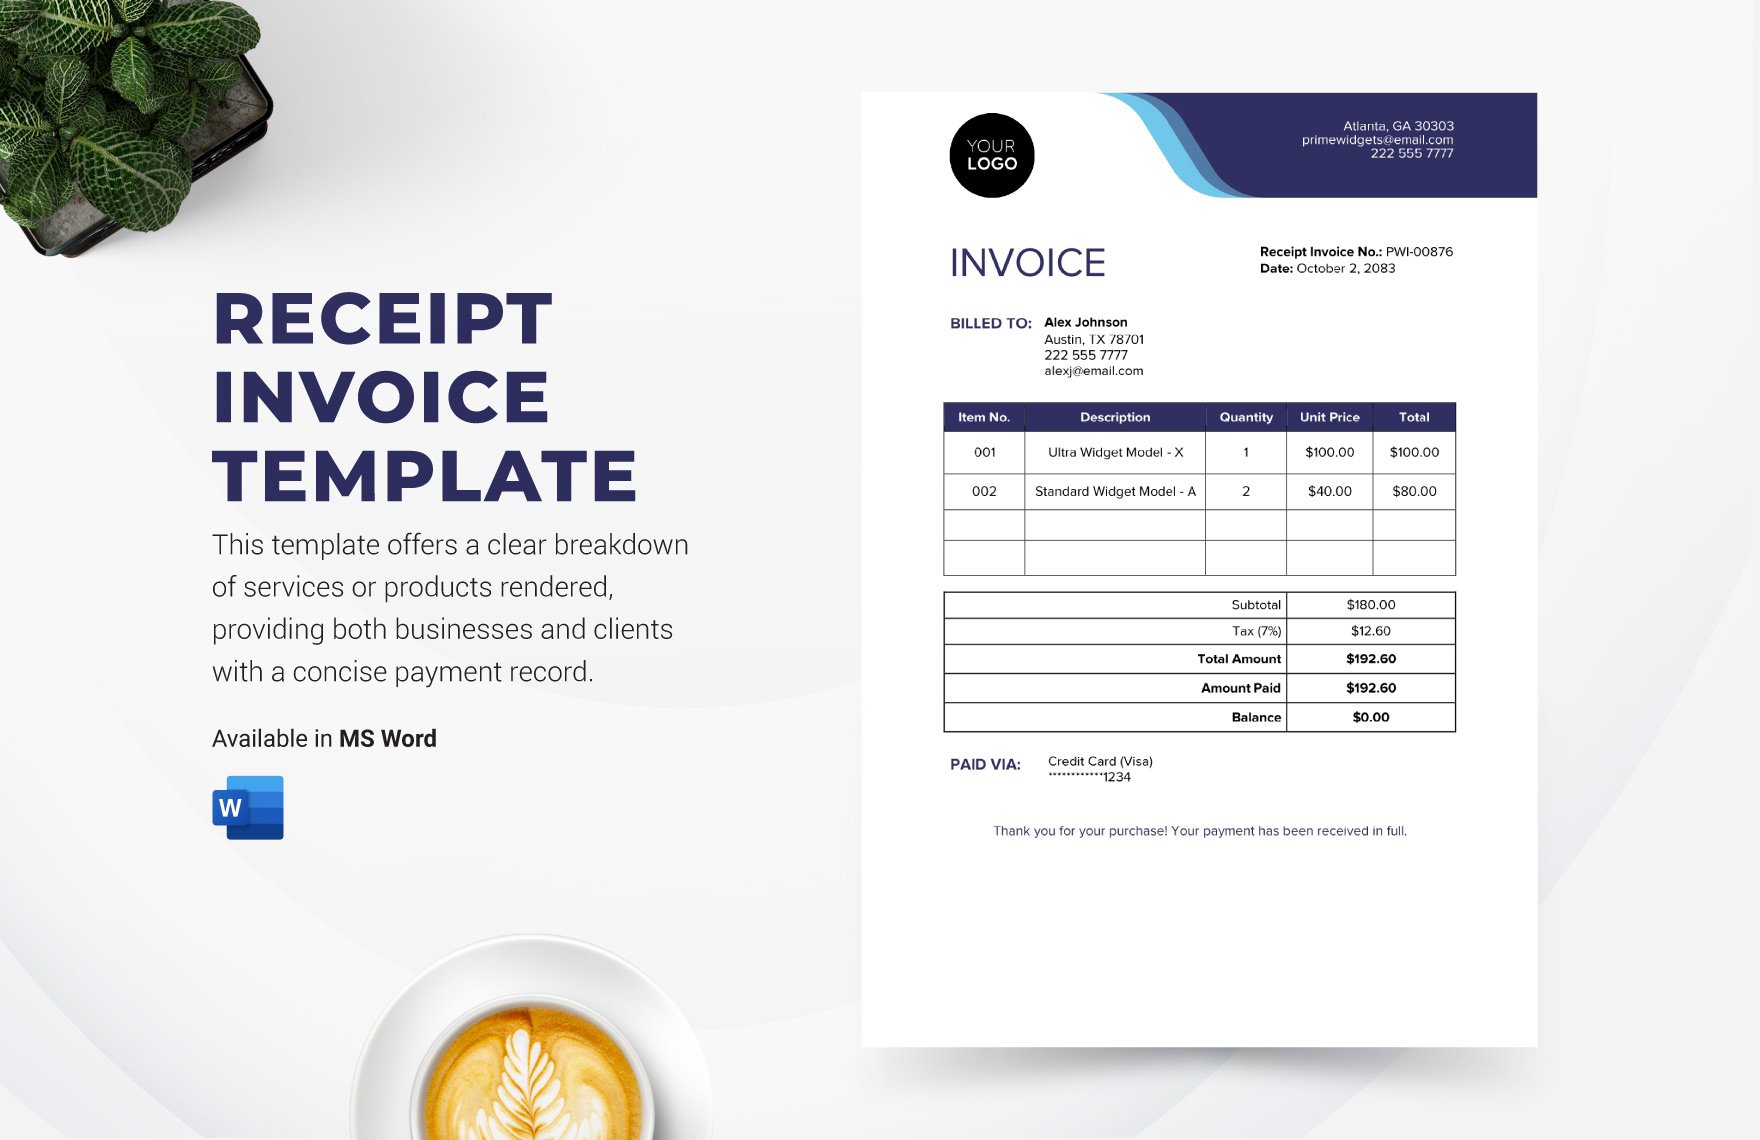 Receipt Invoice Template